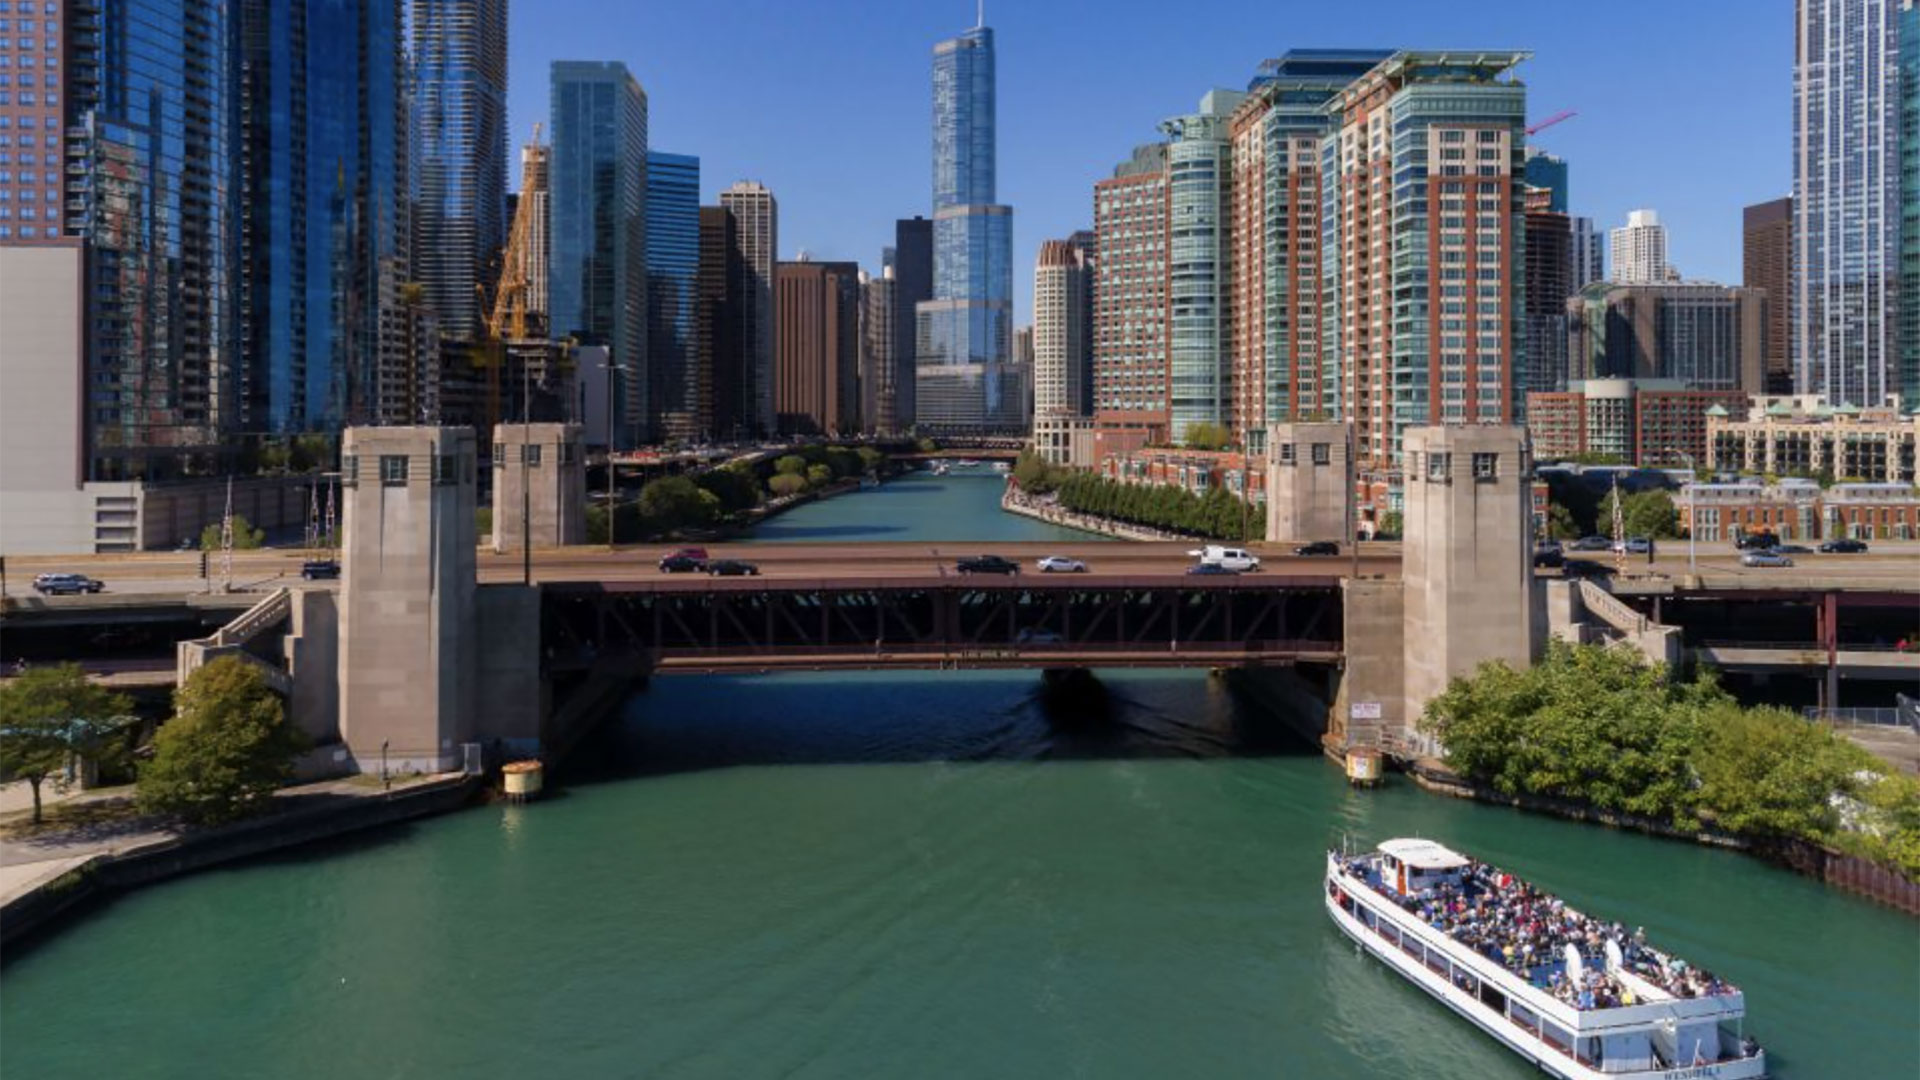 Architecture River Cruise Chicago 45 minute 03